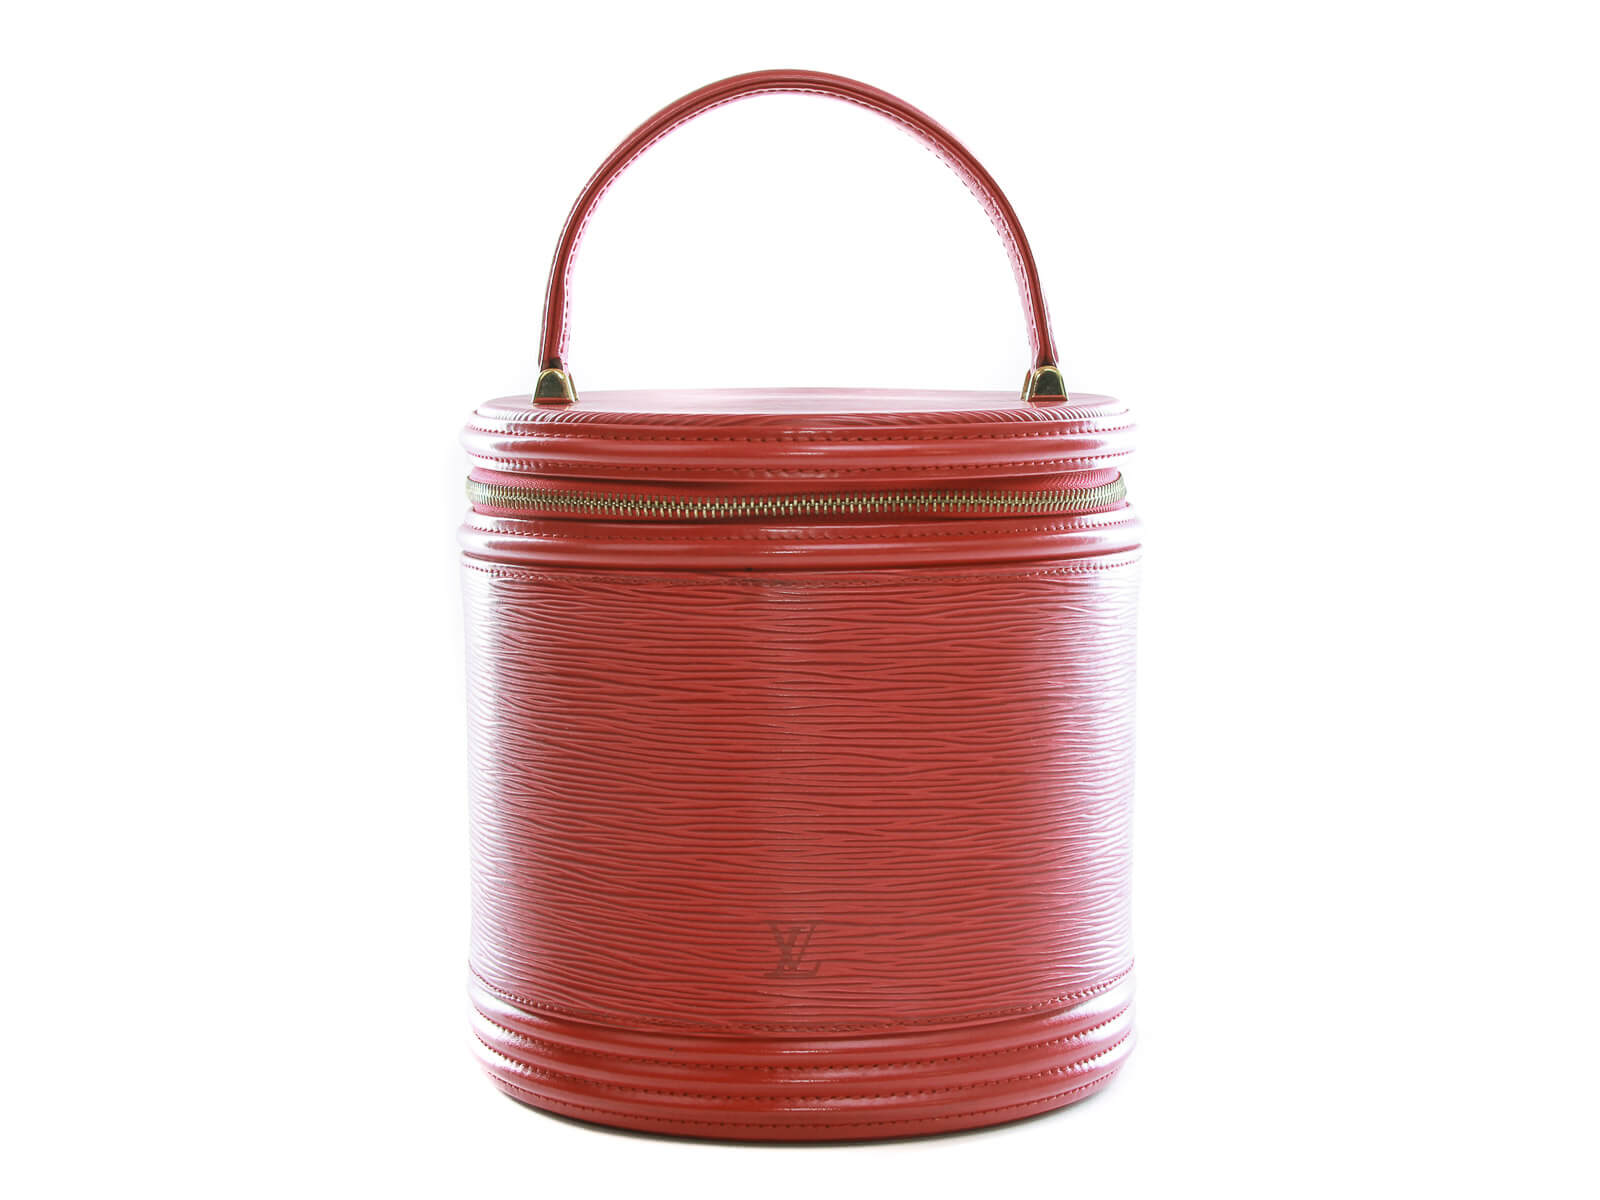 Authentic Louis Vuitton Cannes Red Epi vanity bag | Connect Japan Luxury